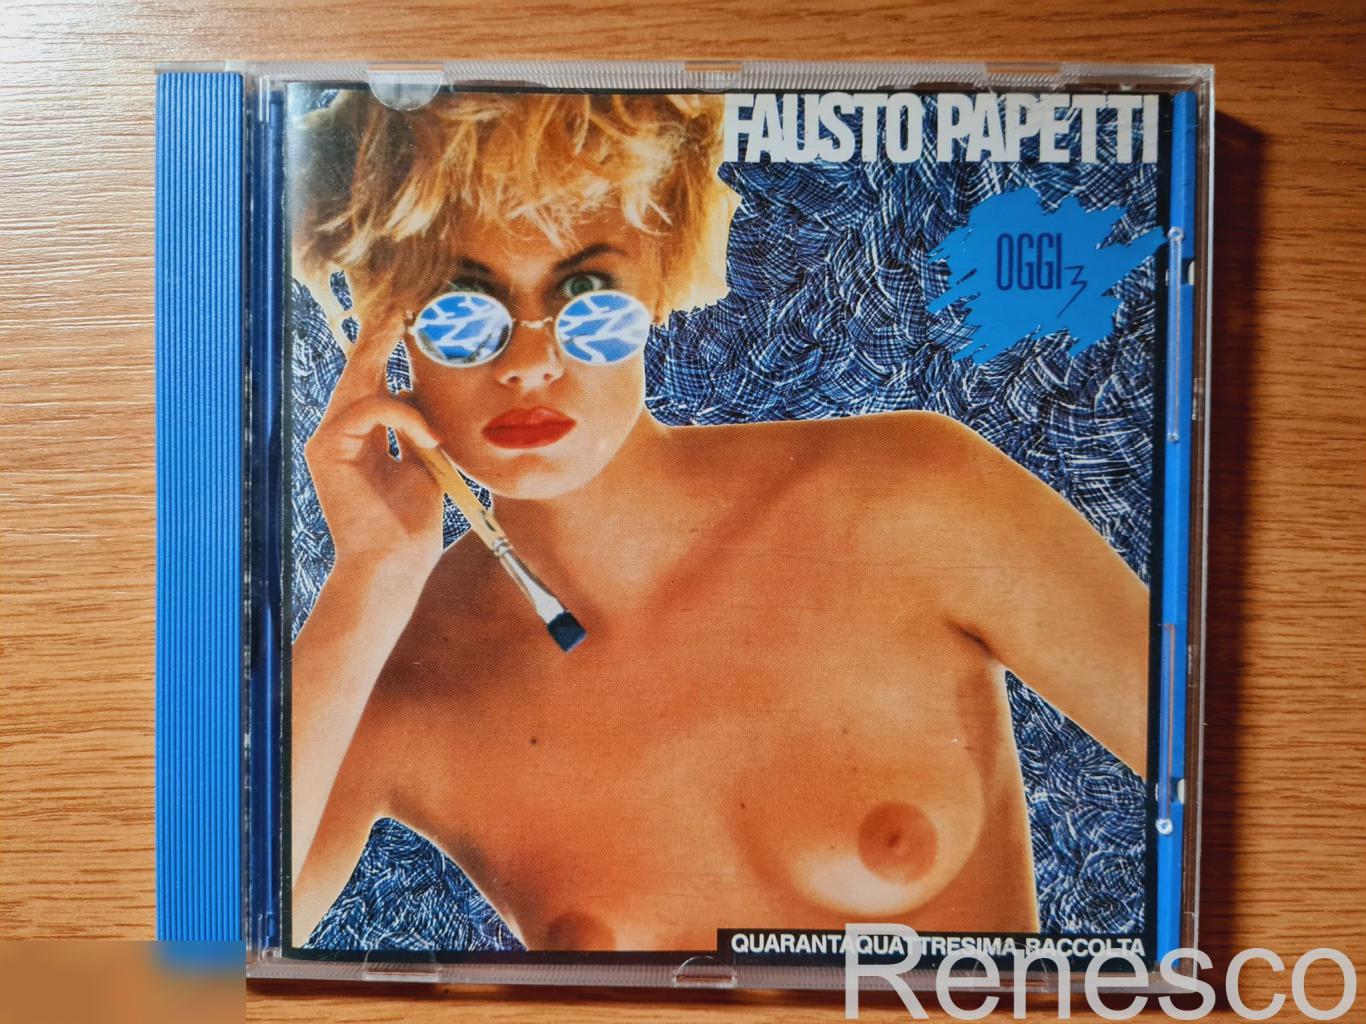 Fausto Papetti – Oggi Vol. 3 (Quarantaquattresima Raccolta) (Austria) (1991)